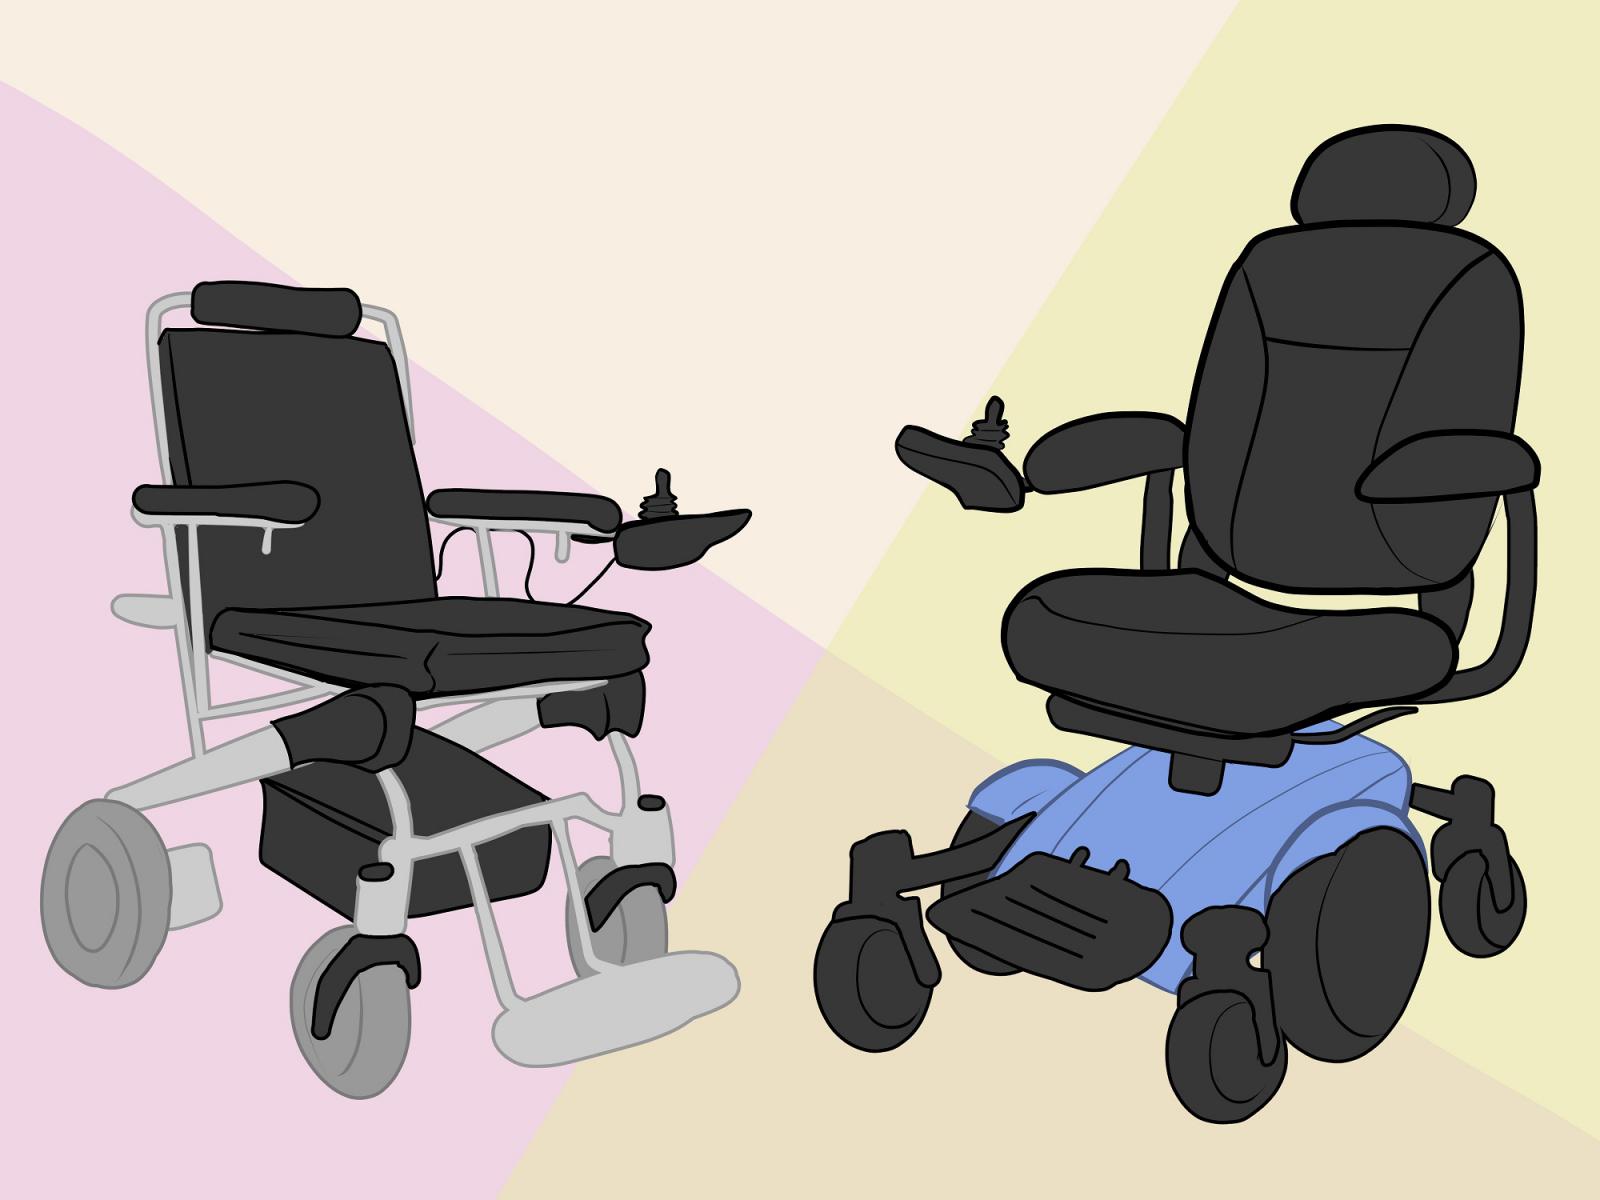 Image of power wheelchairs.